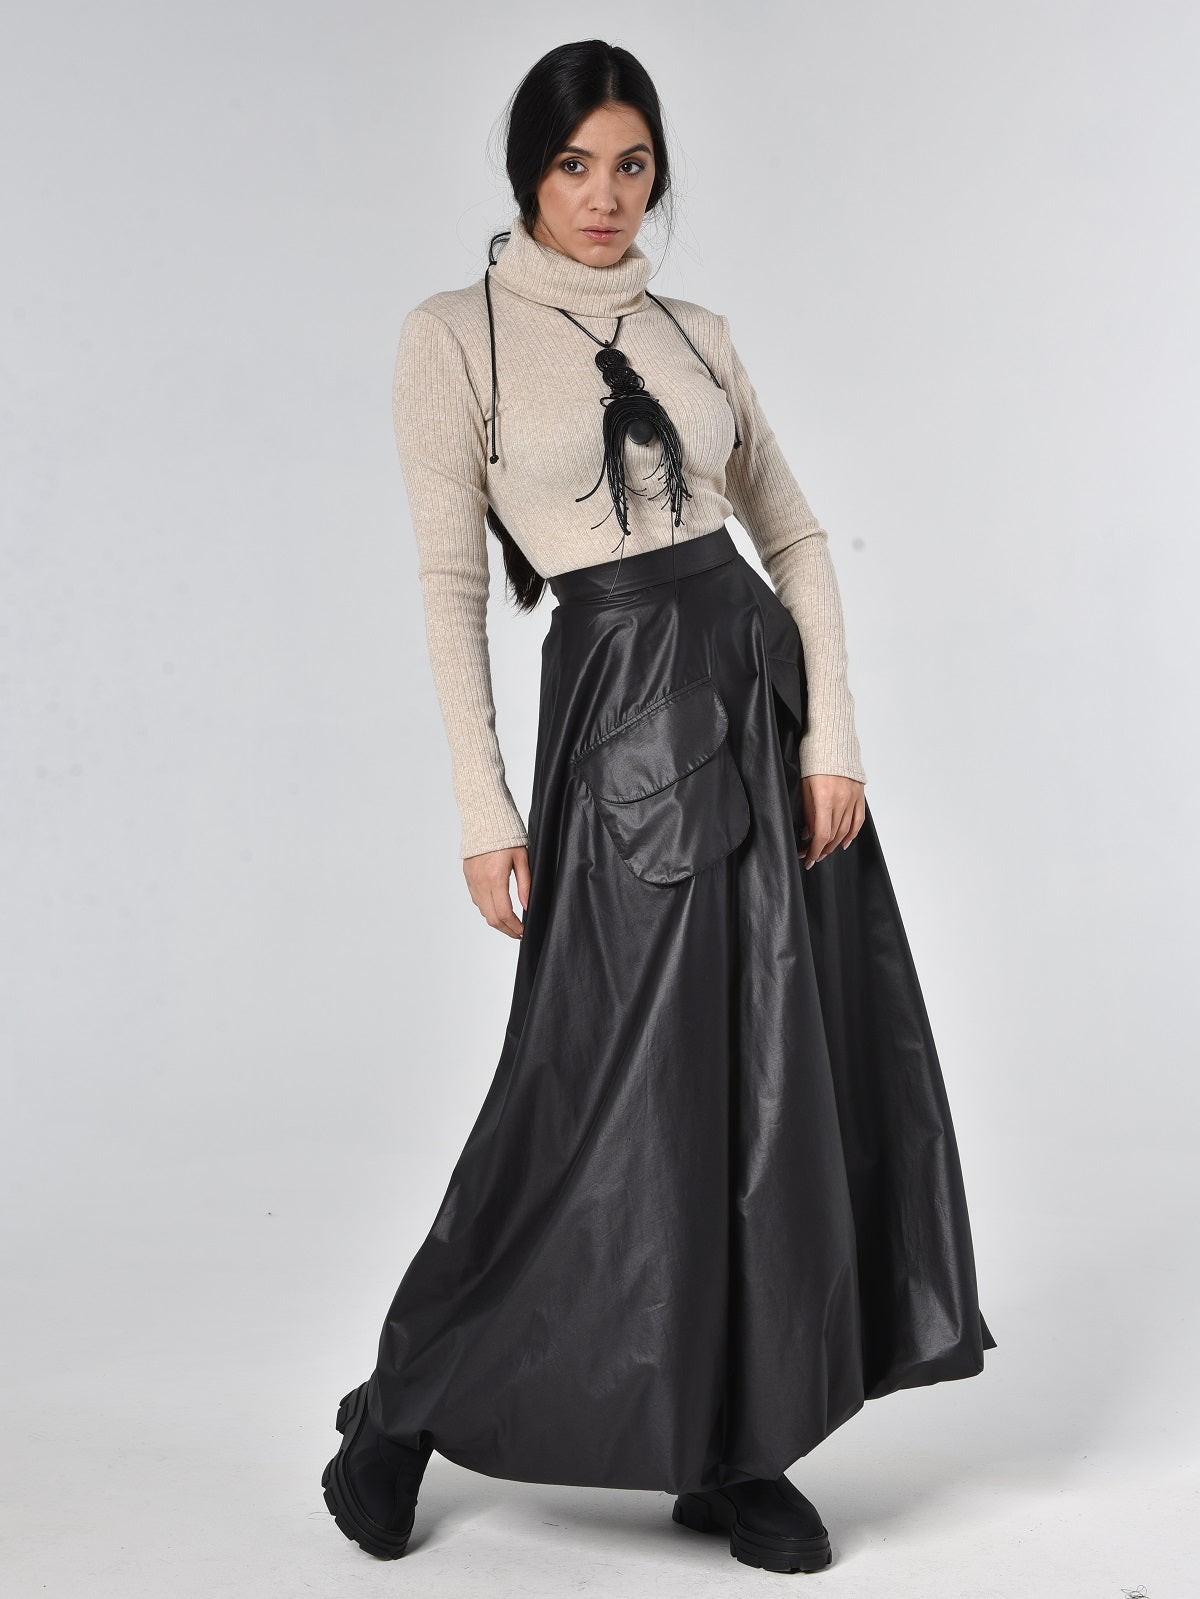 Maxi Black Skirt